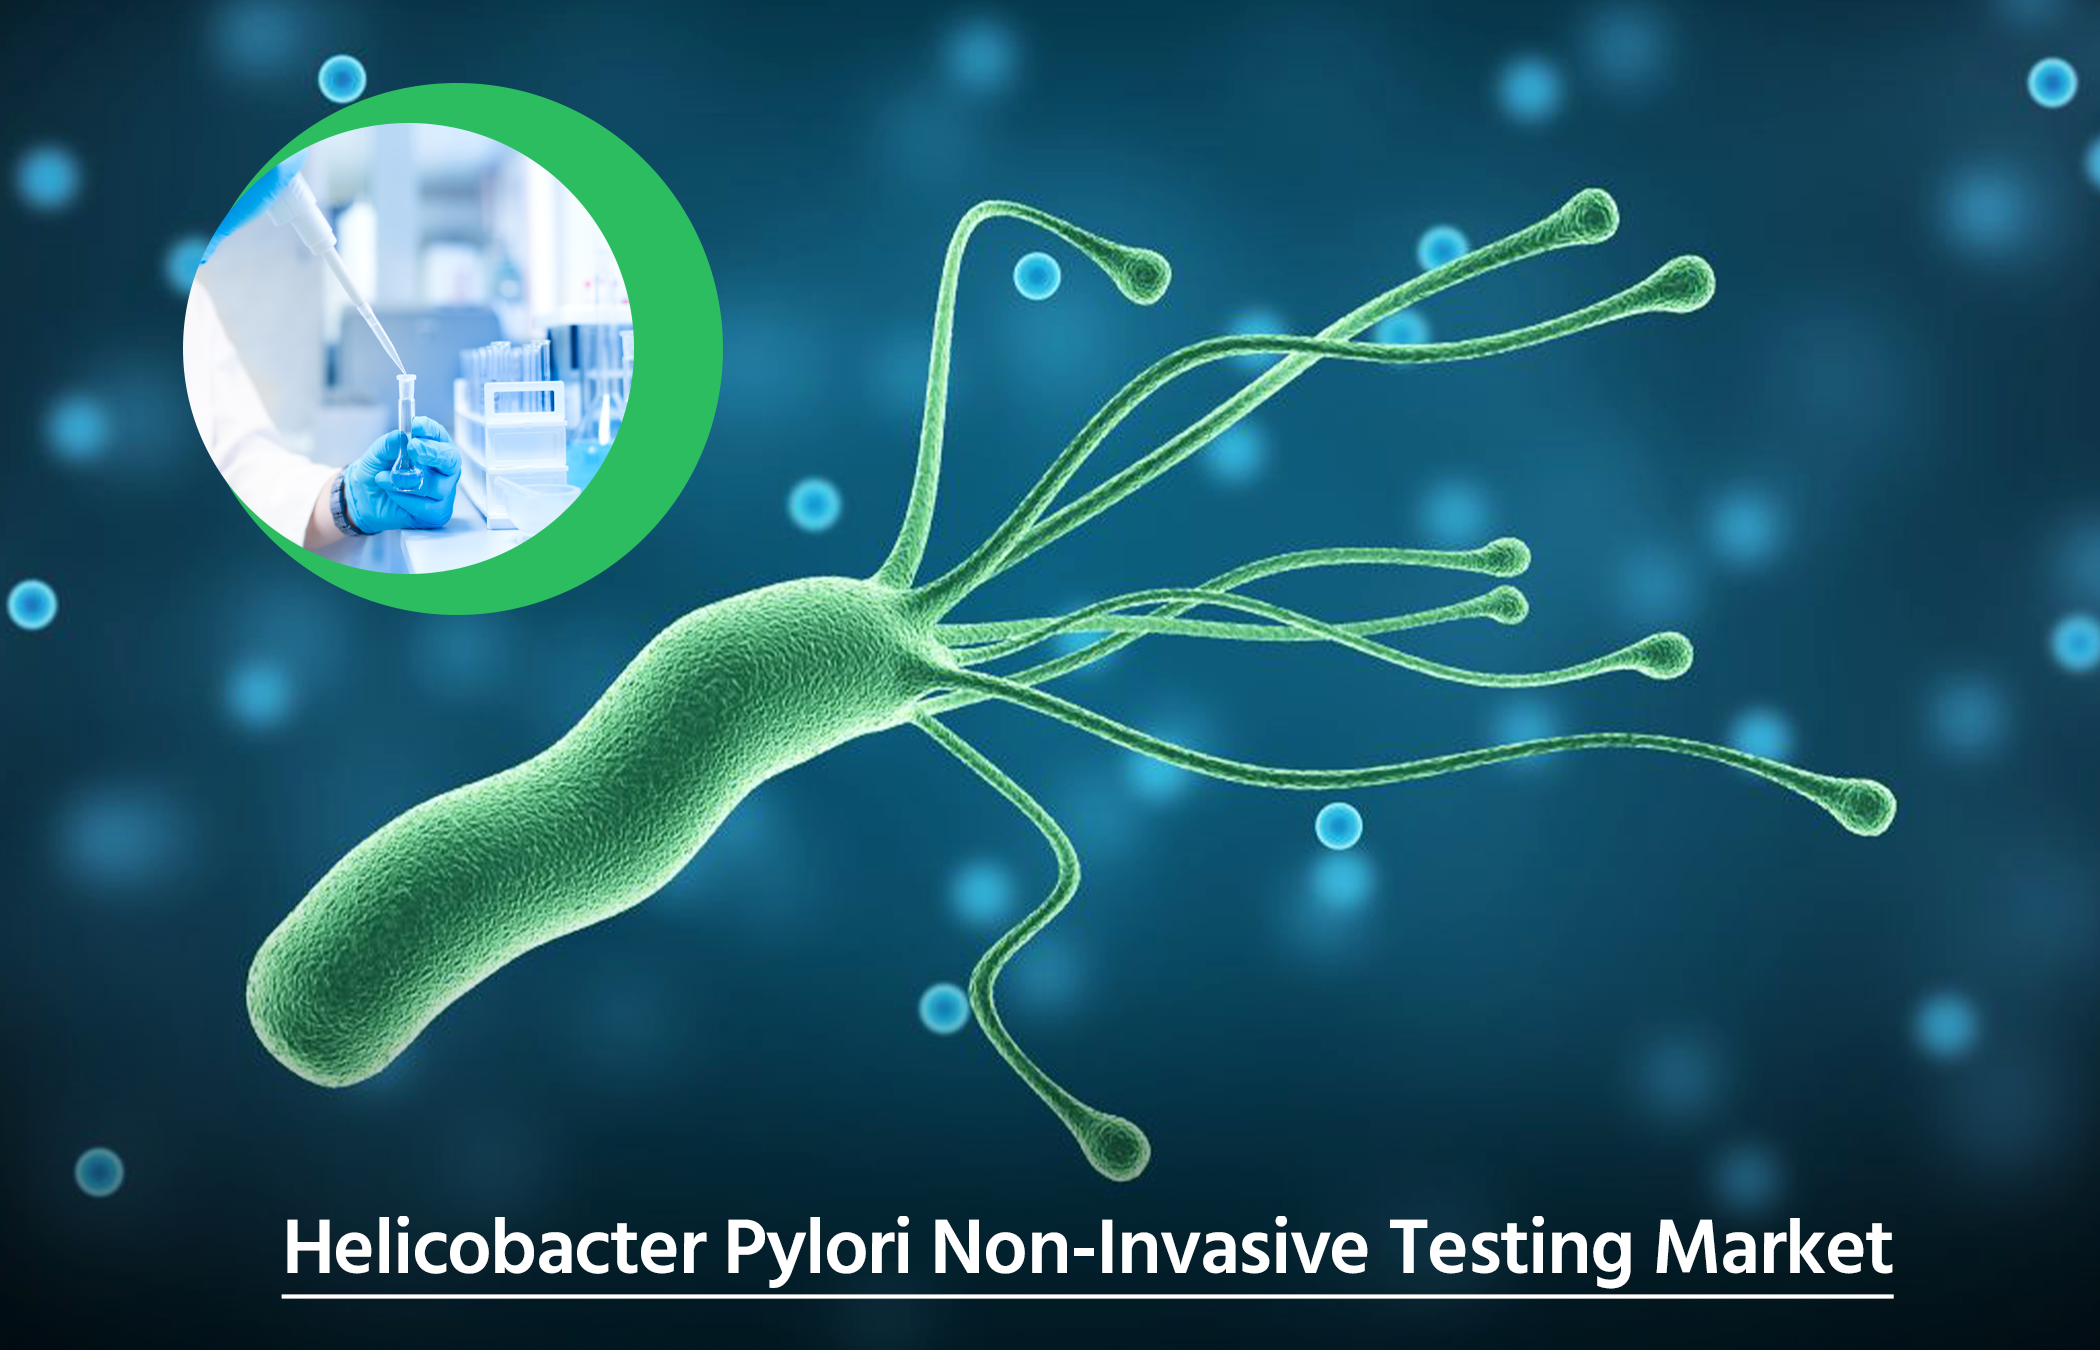 Helicobacter Pylori Non-invasive Testing Market Analysis by Top Players (2019-2030) | Meridian Bioscience, DiaSorin S.p.A, Sekisui Diagnostics, Biomerica, CorisBioconcept SPRL